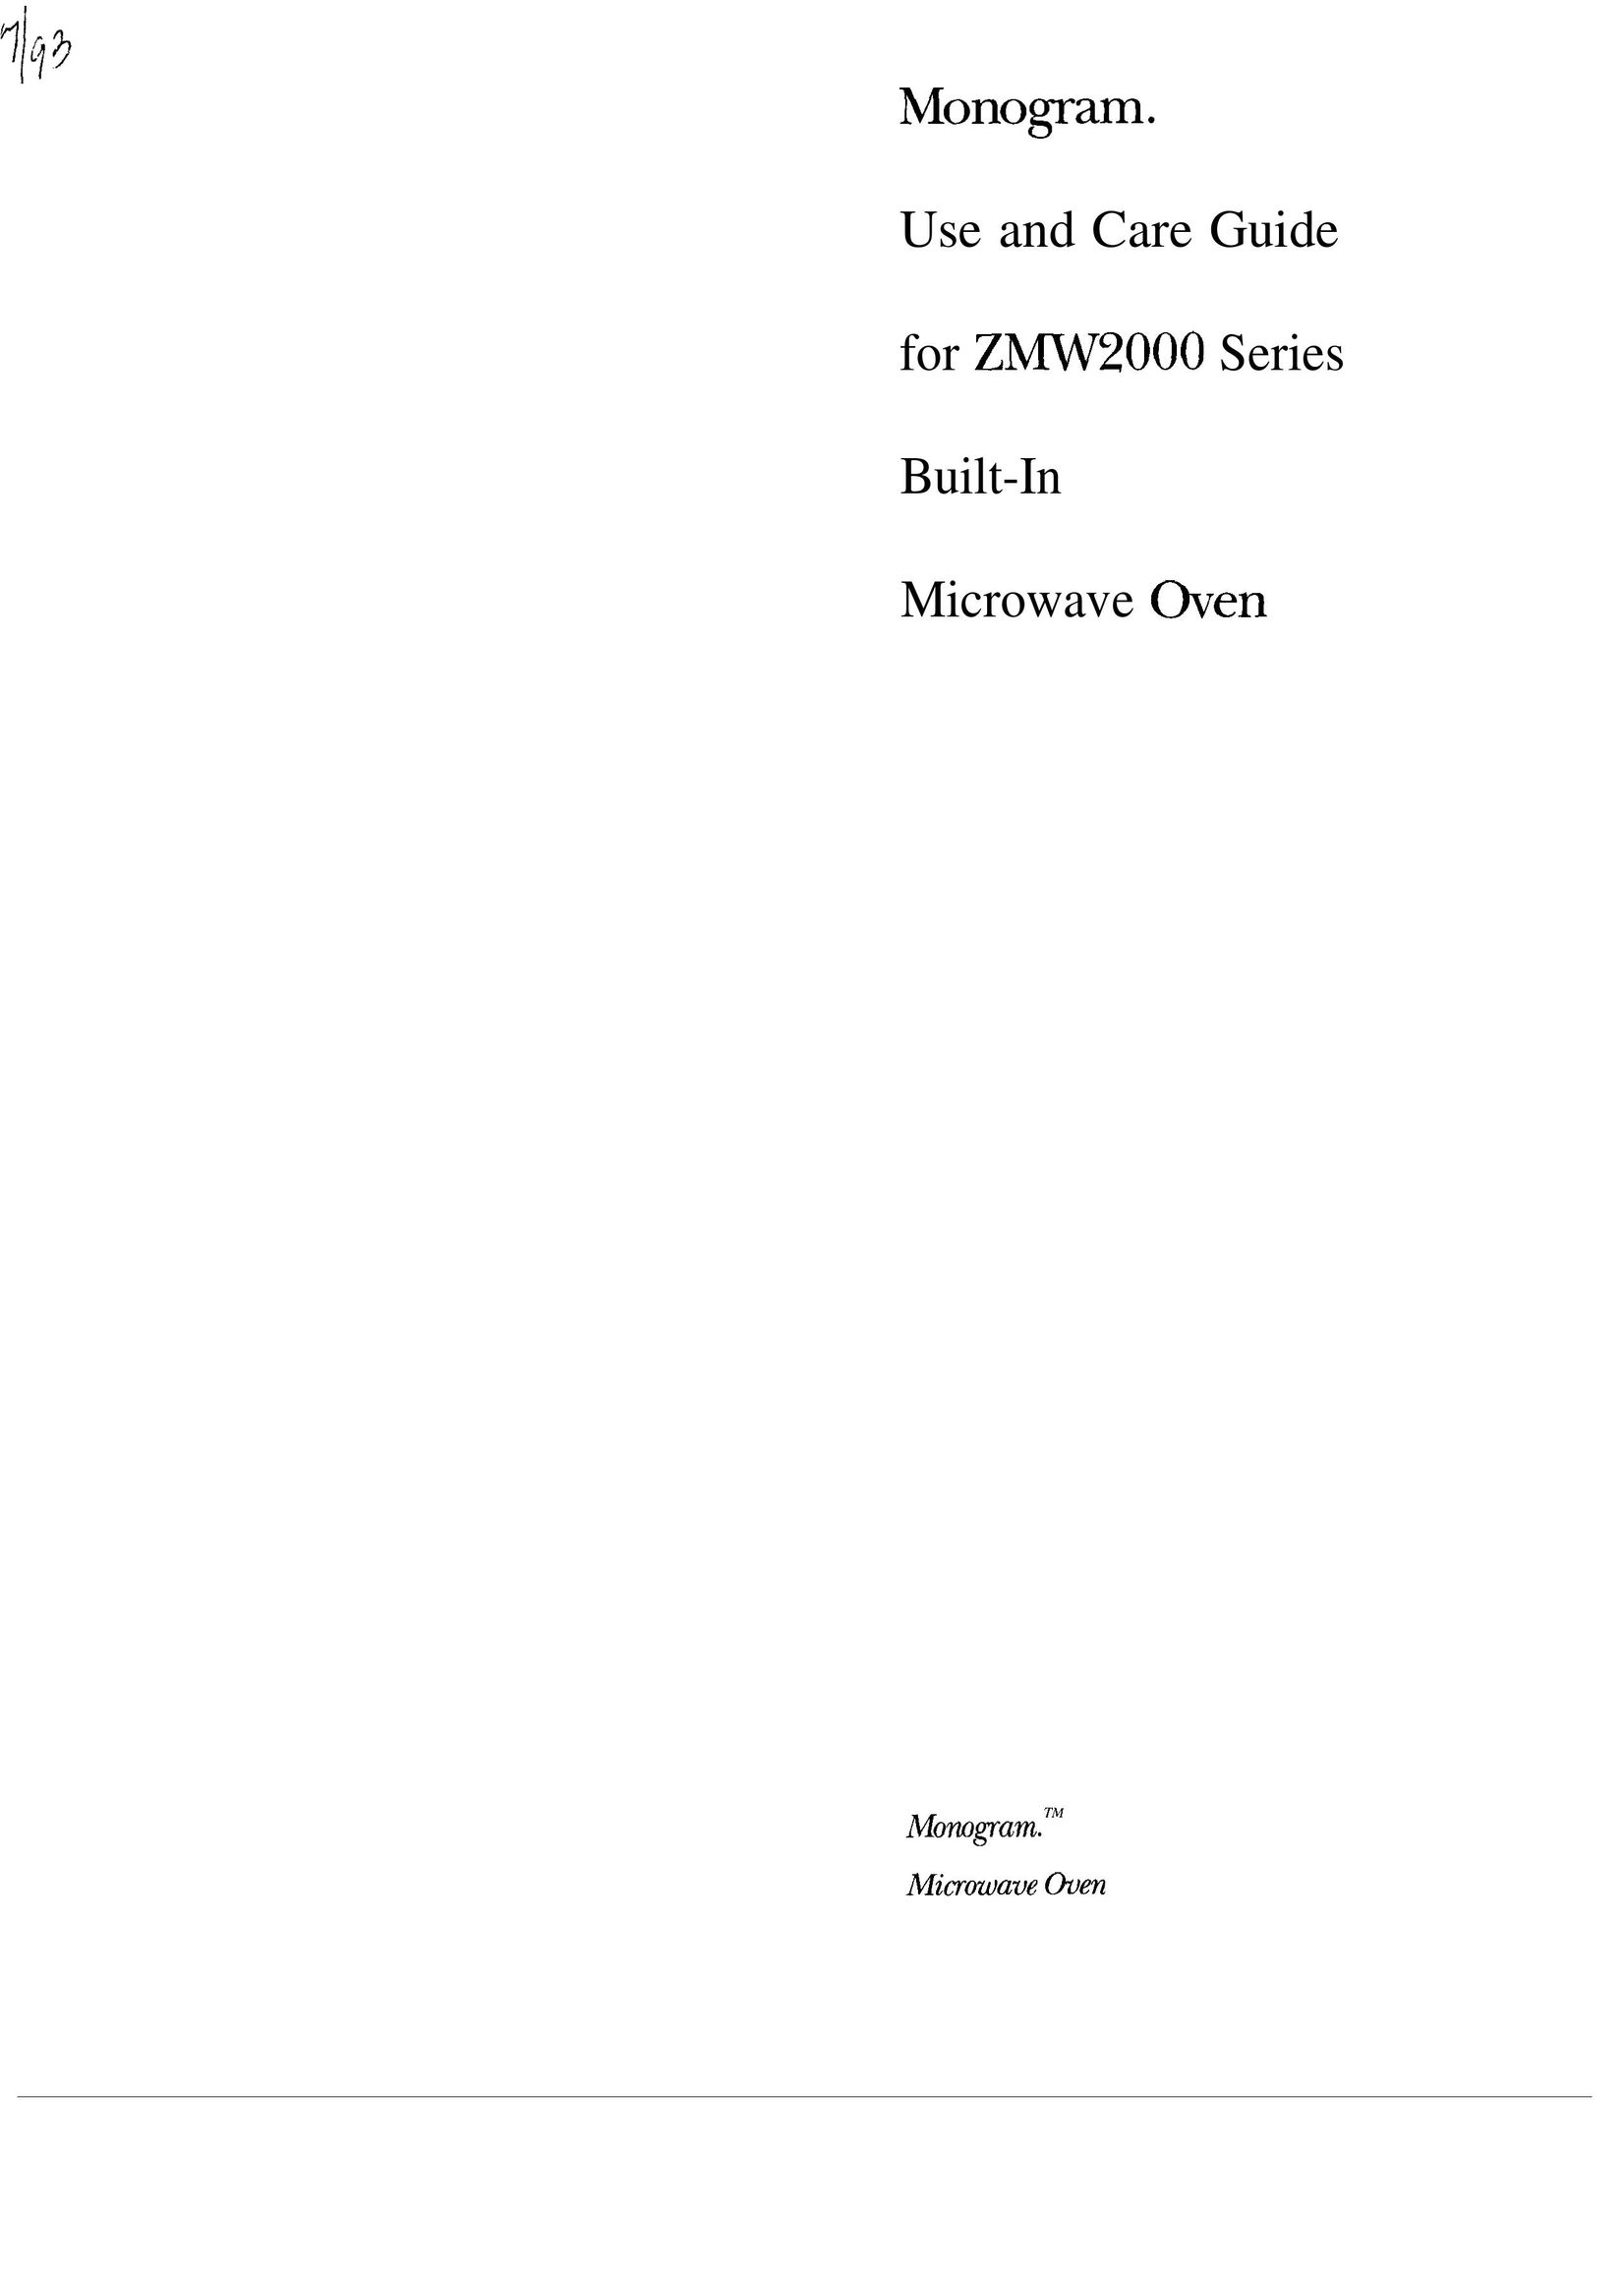 GE Monogram ZW2000 Microwave Oven User Manual